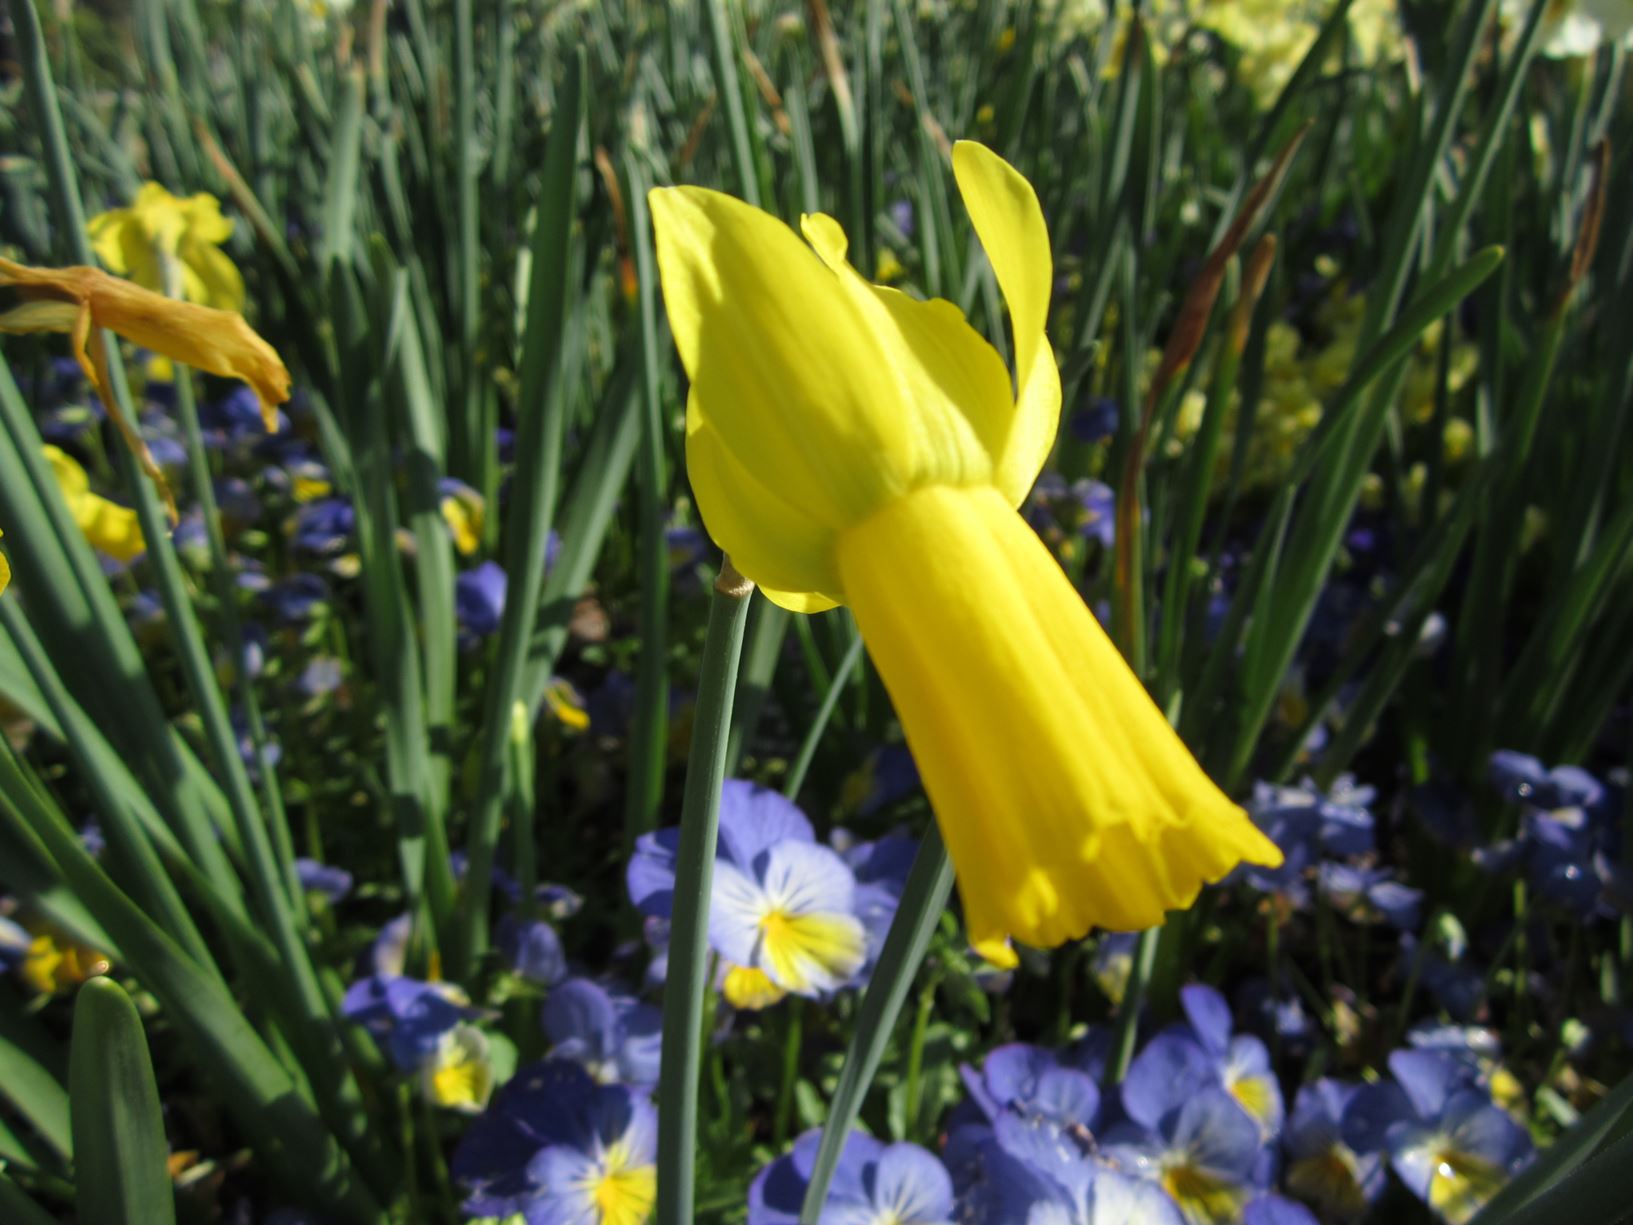 Narcissus 'Rapture' - cyclamineus daffodil